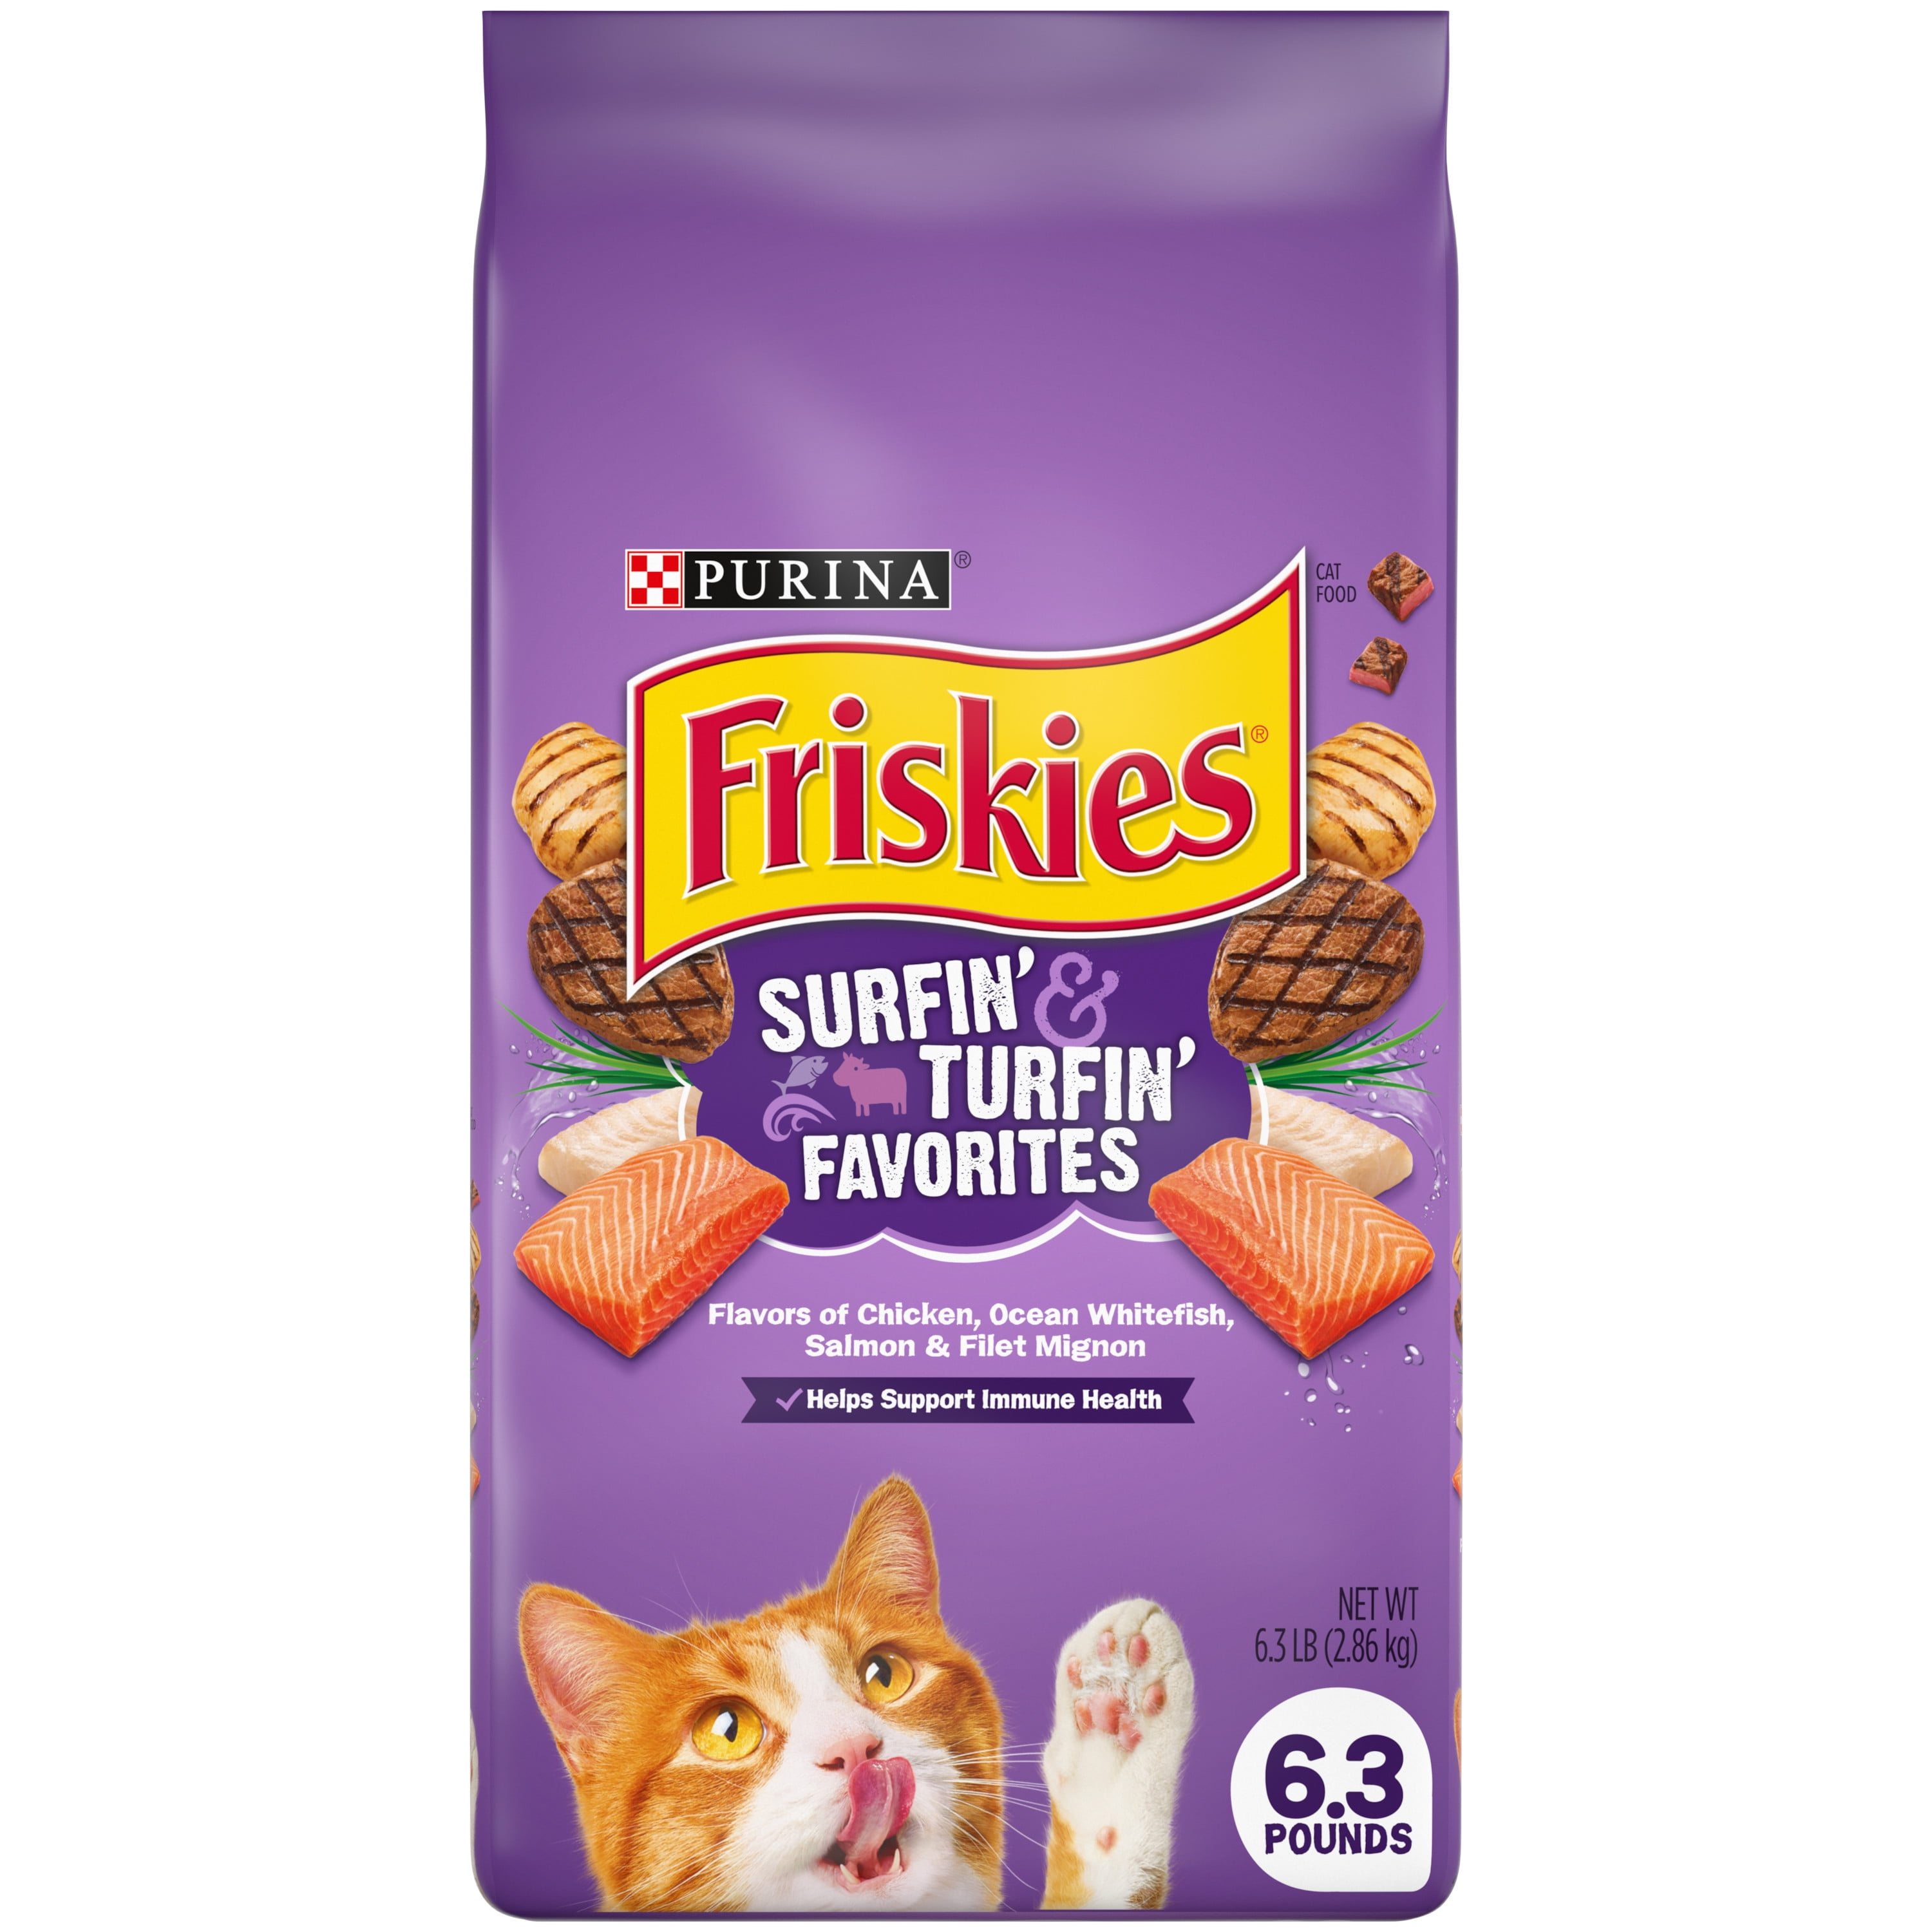 Friskies Dry Cat Food, Surfin' & Turfin' Favorites, 6.3 lb. Bag